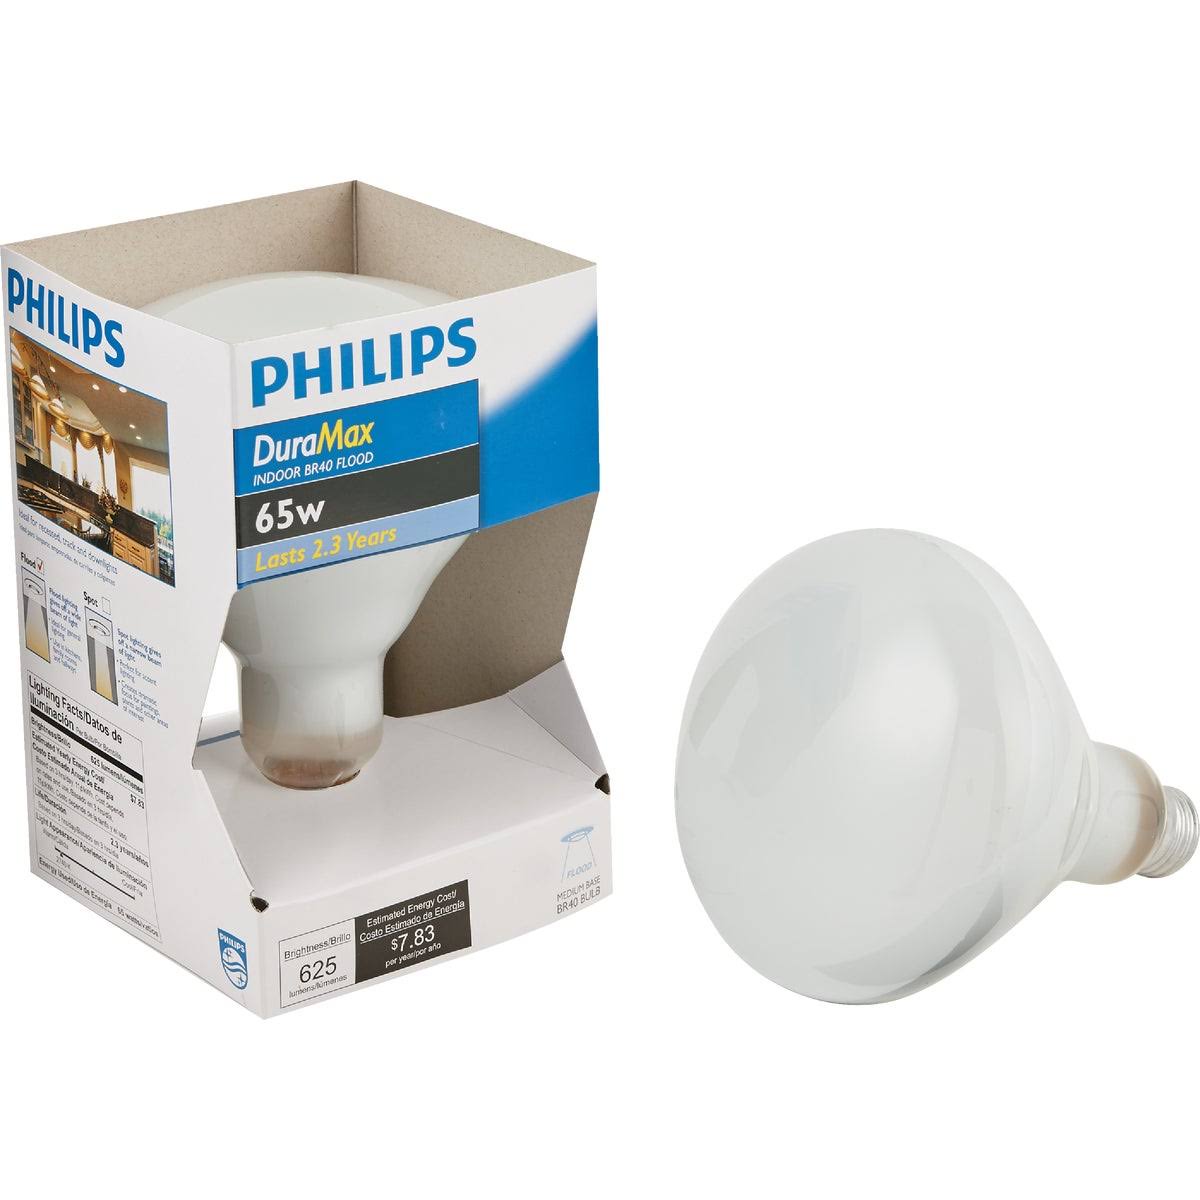 Philips Duramax Br40 Indoor Flood Light Bulb - 65W